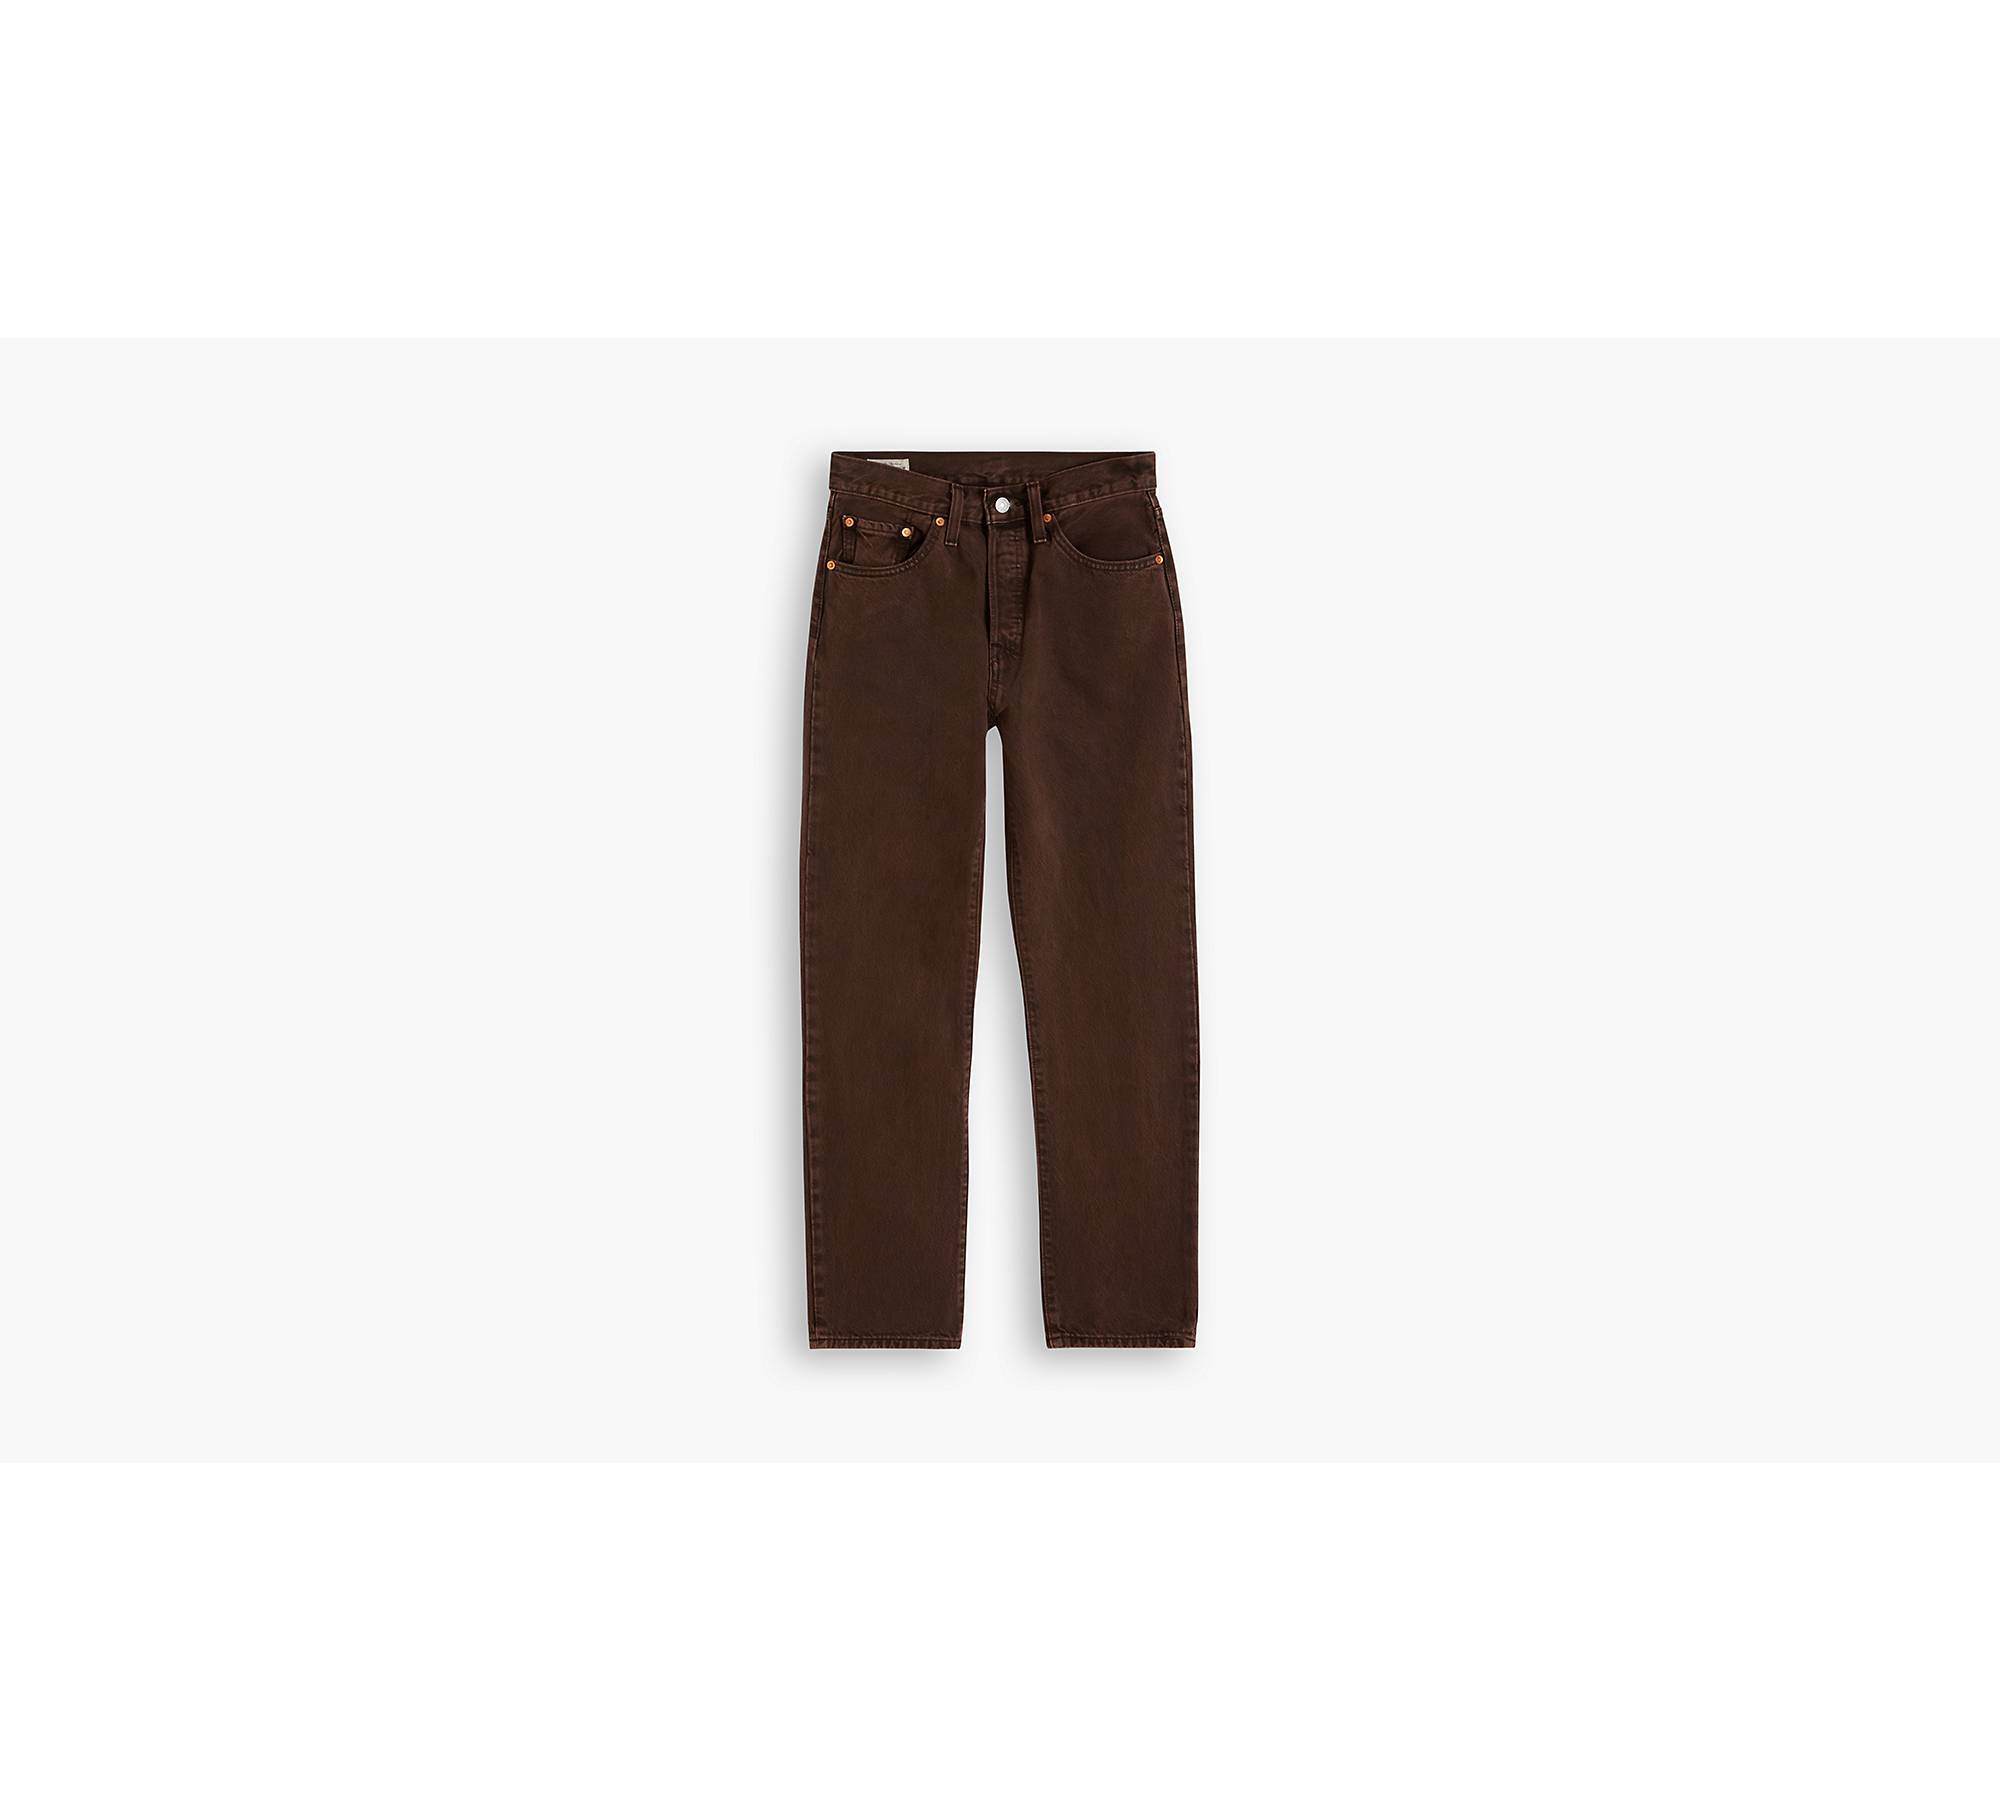 Levi's 501 Brown Jeans Vintage High Rise Denim Trousers 